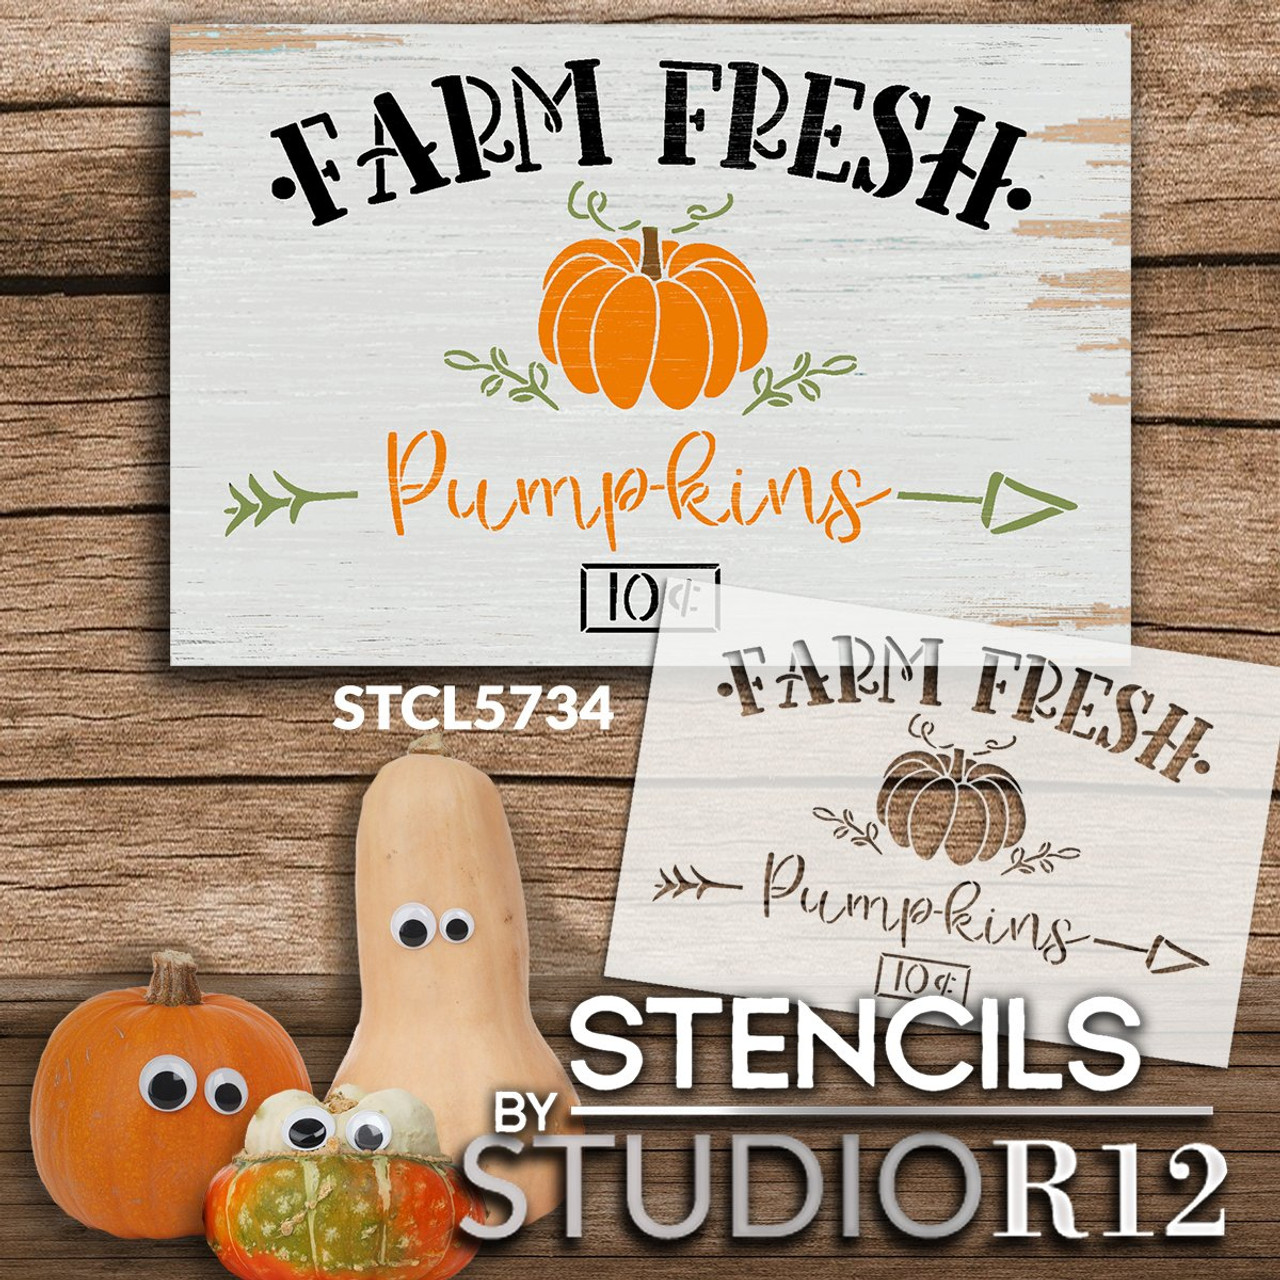 Farm Fresh Pumpkins 10 Cents Stencil by StudioR12 | Craft DIY Fall Autumn Farmhouse Home Decor | Paint Wood Sign Reusable Mylar Template | Select Size